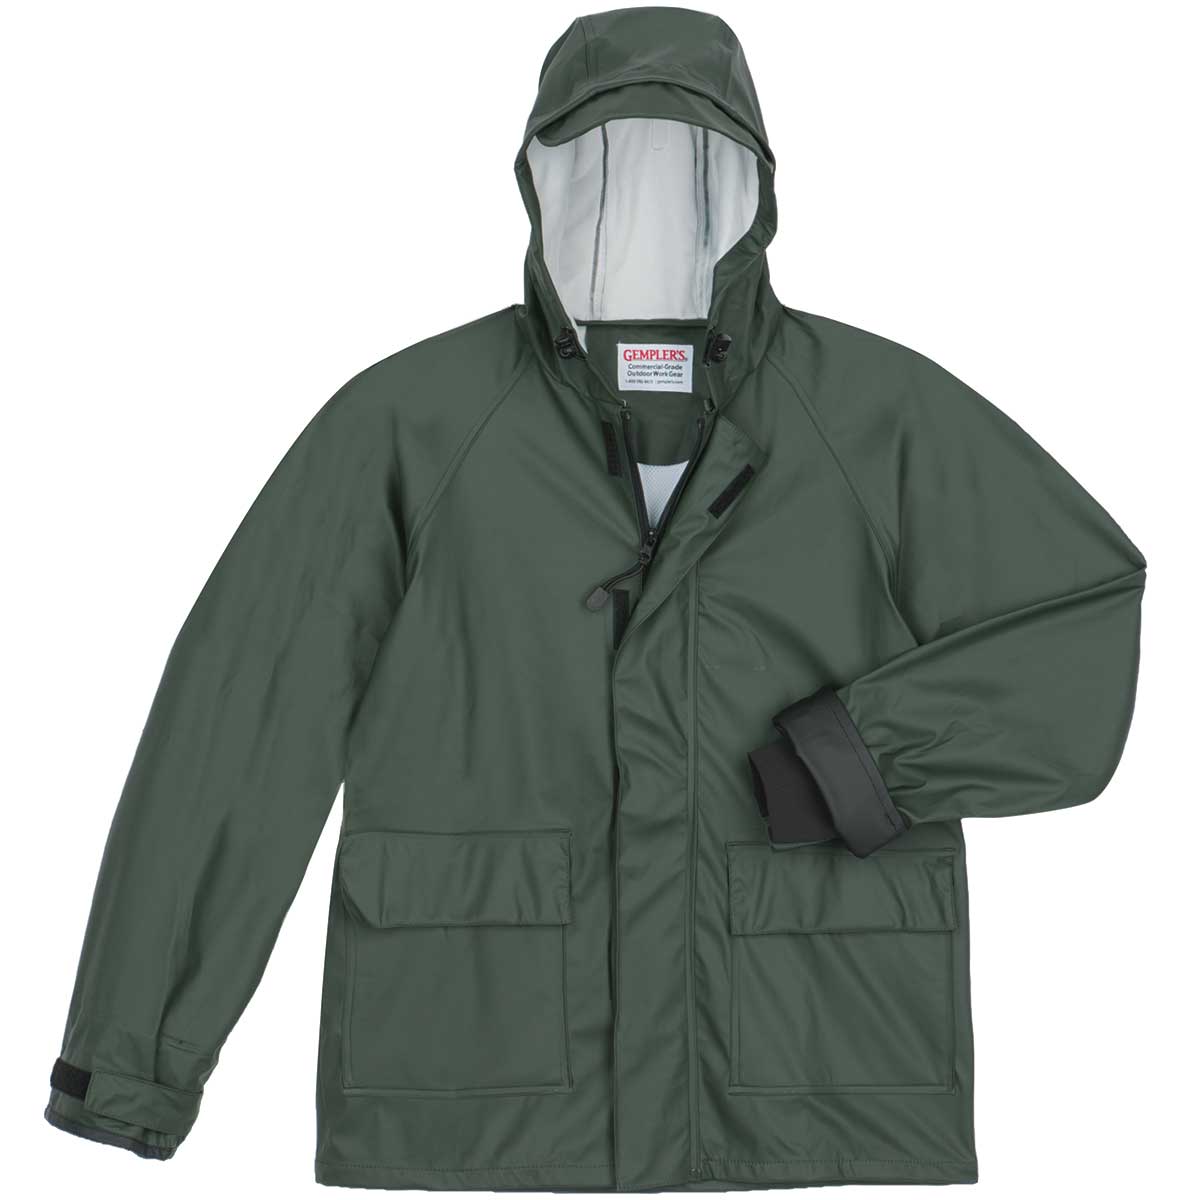 Stormline Crew 255 Jacket : Fishermans Clothing, Commercial